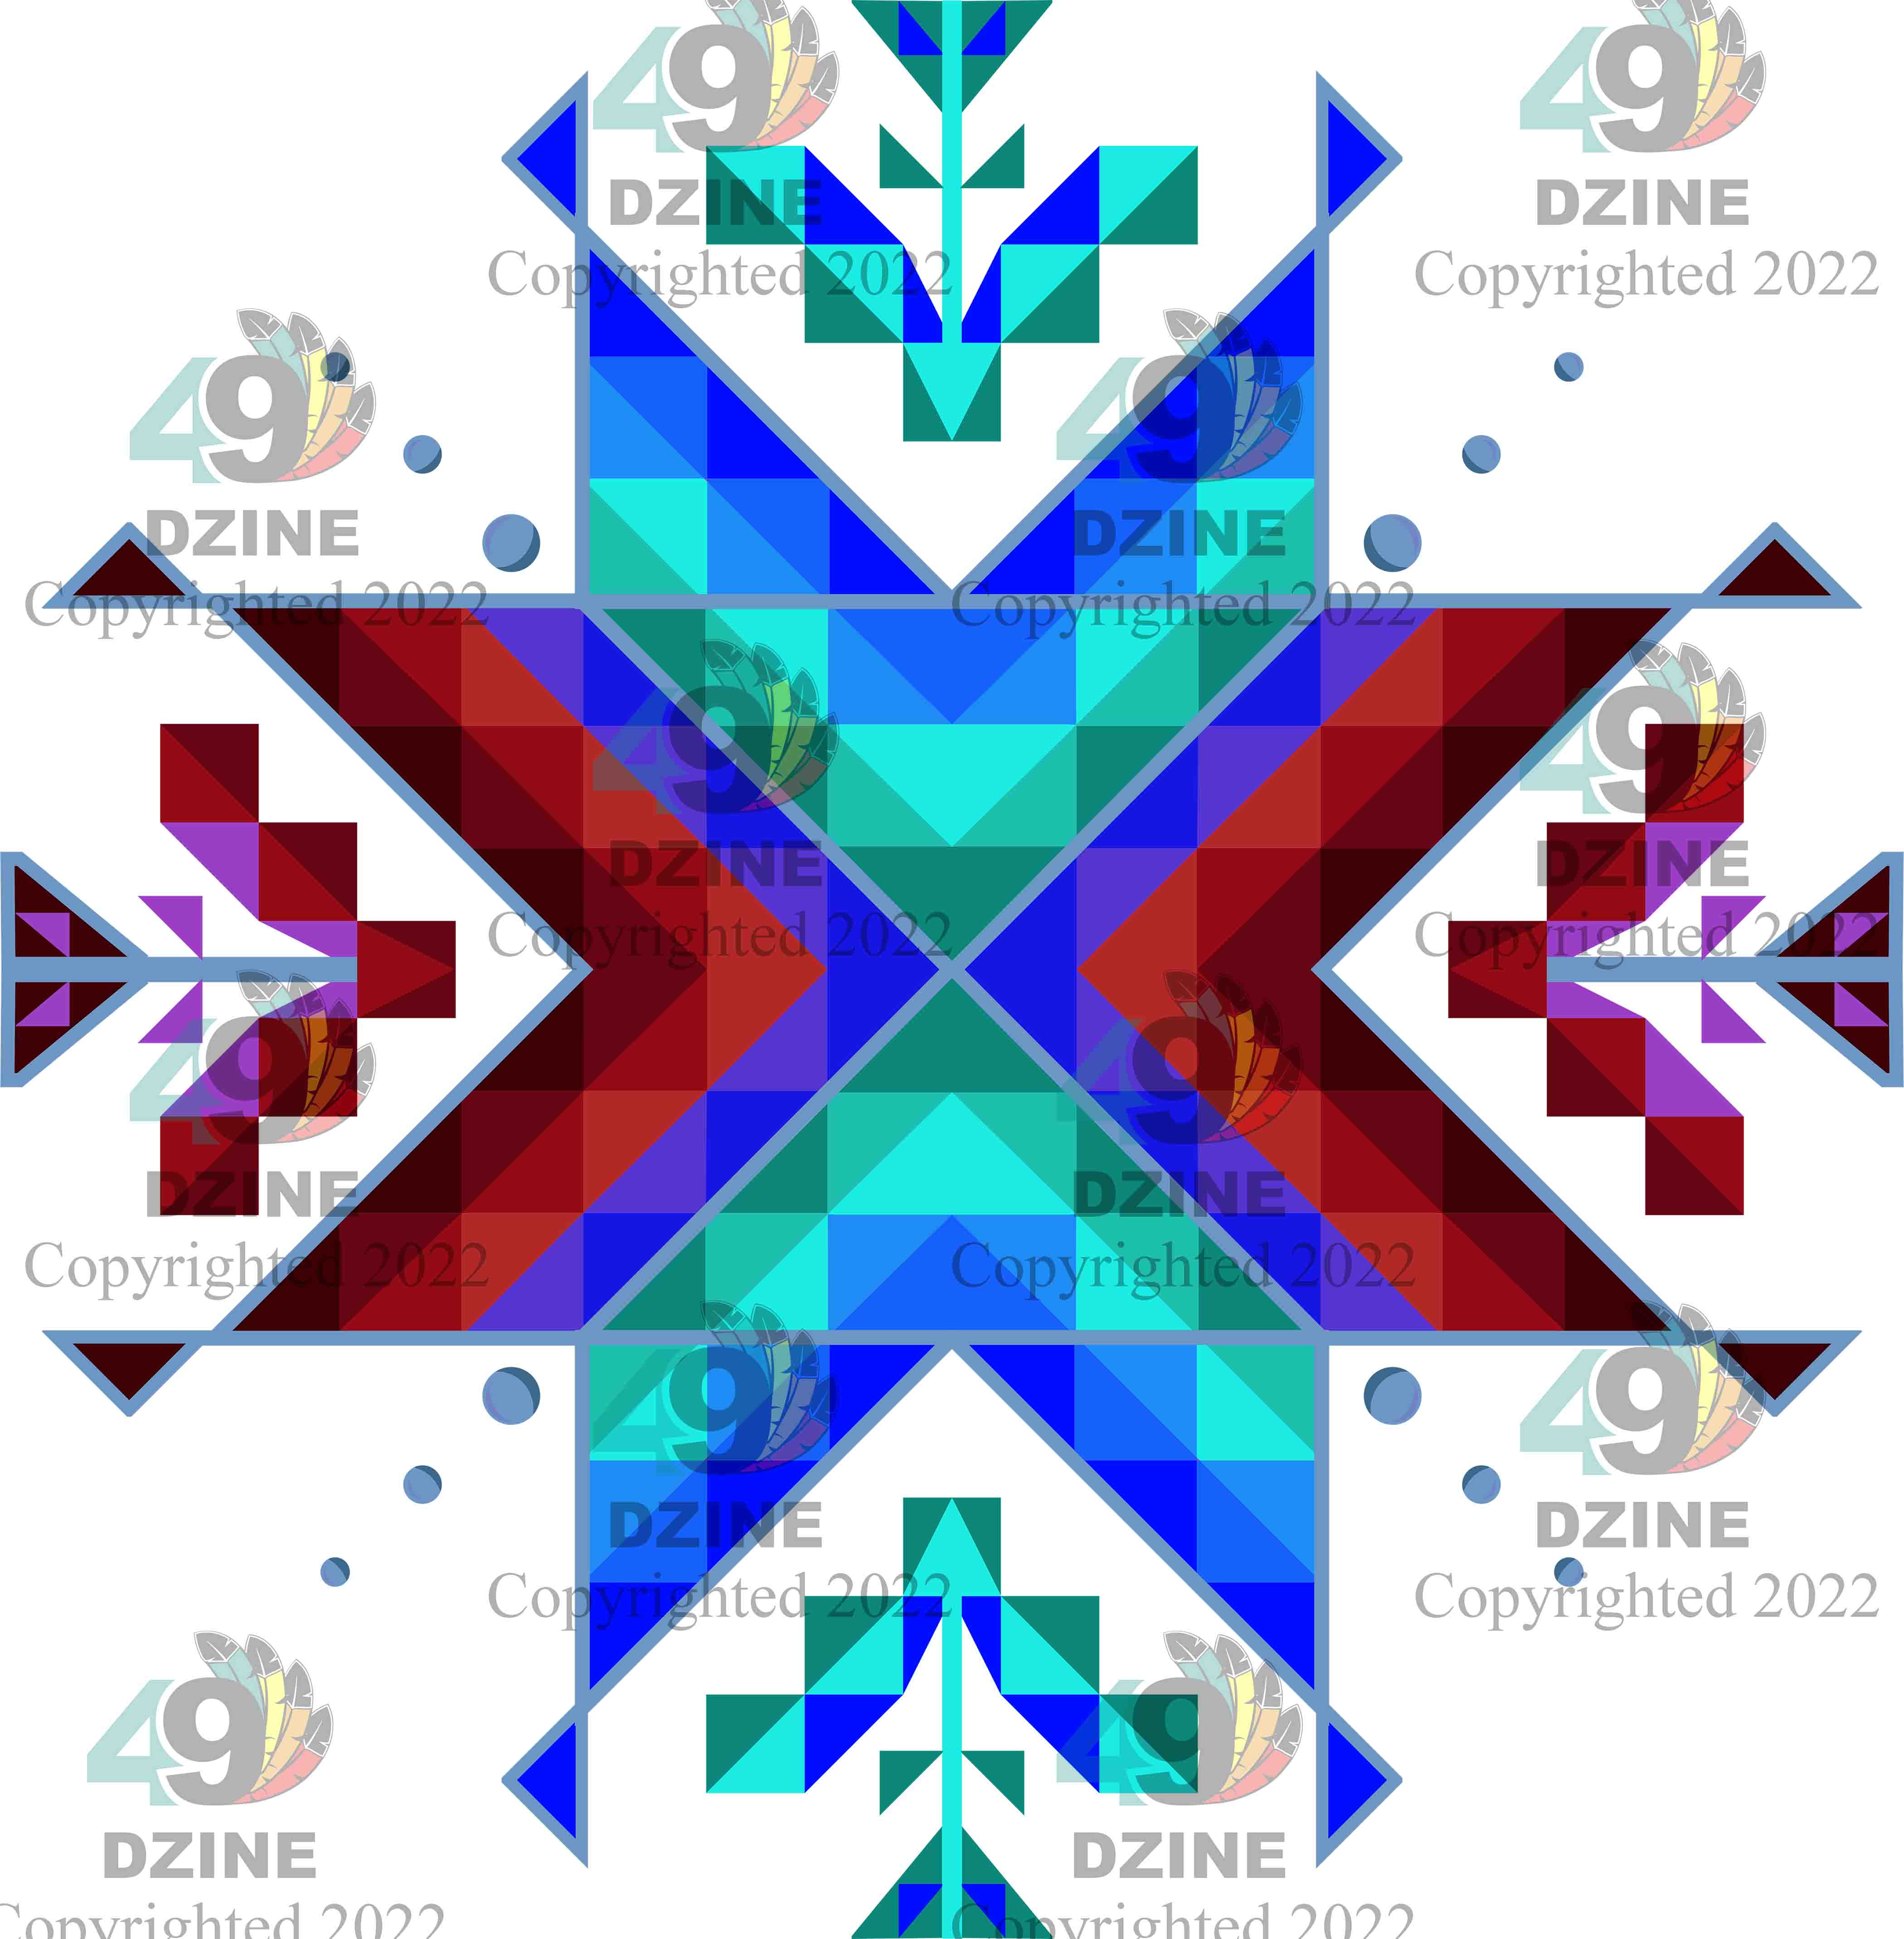 6-inch Geometric Transfer Dream of the Ancestors Transfers 49 Dzine Dream of the Ancestors Blue 